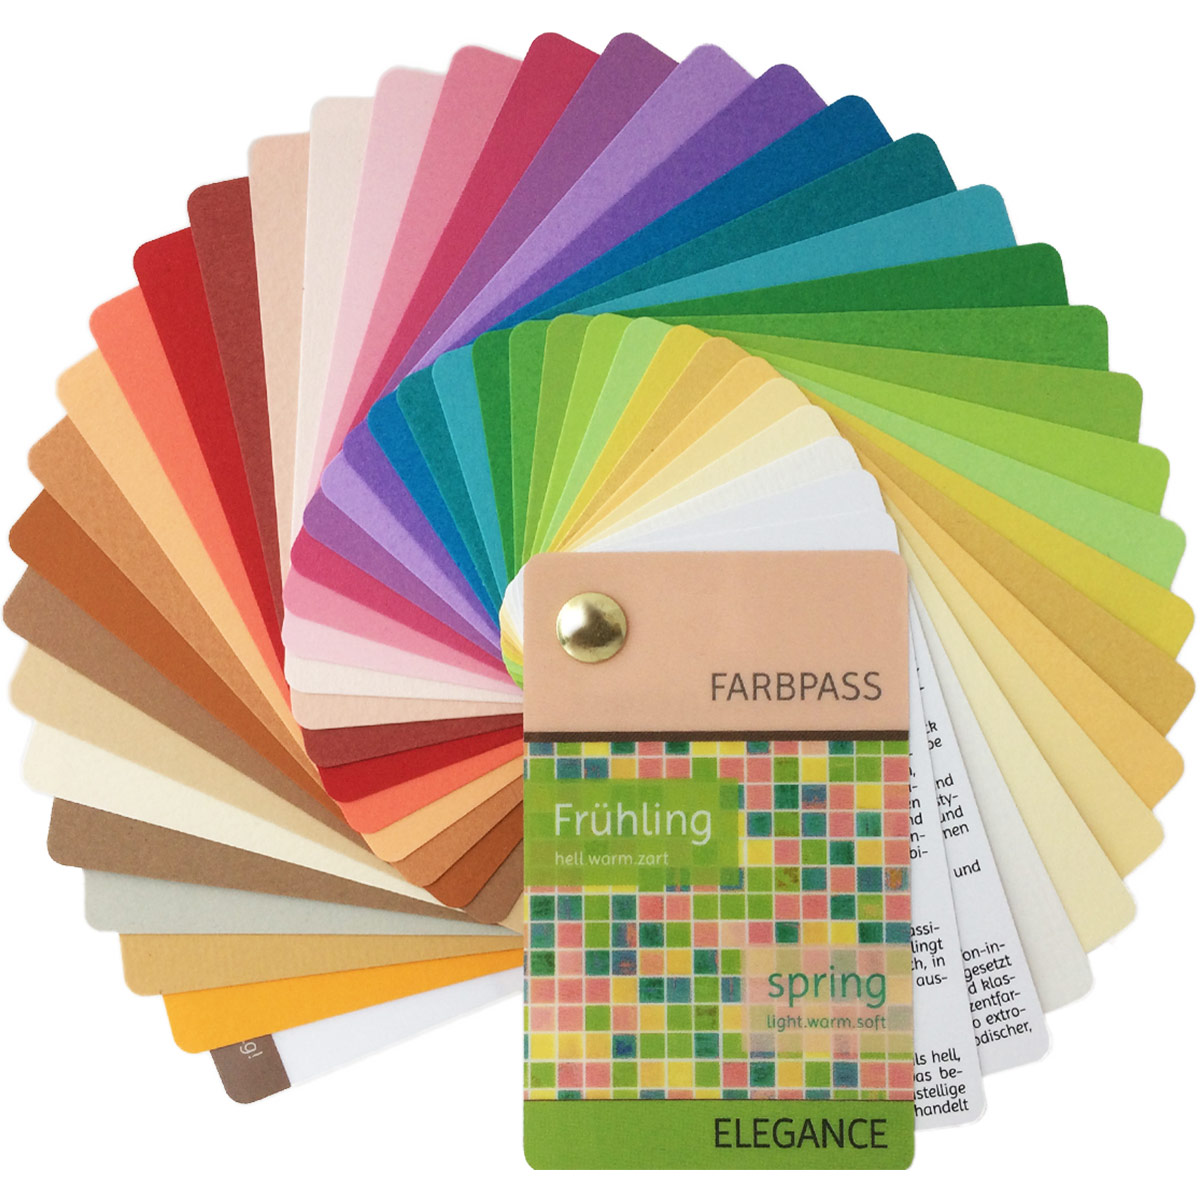 Farbpass Frühling - Elegance, 35 Farben